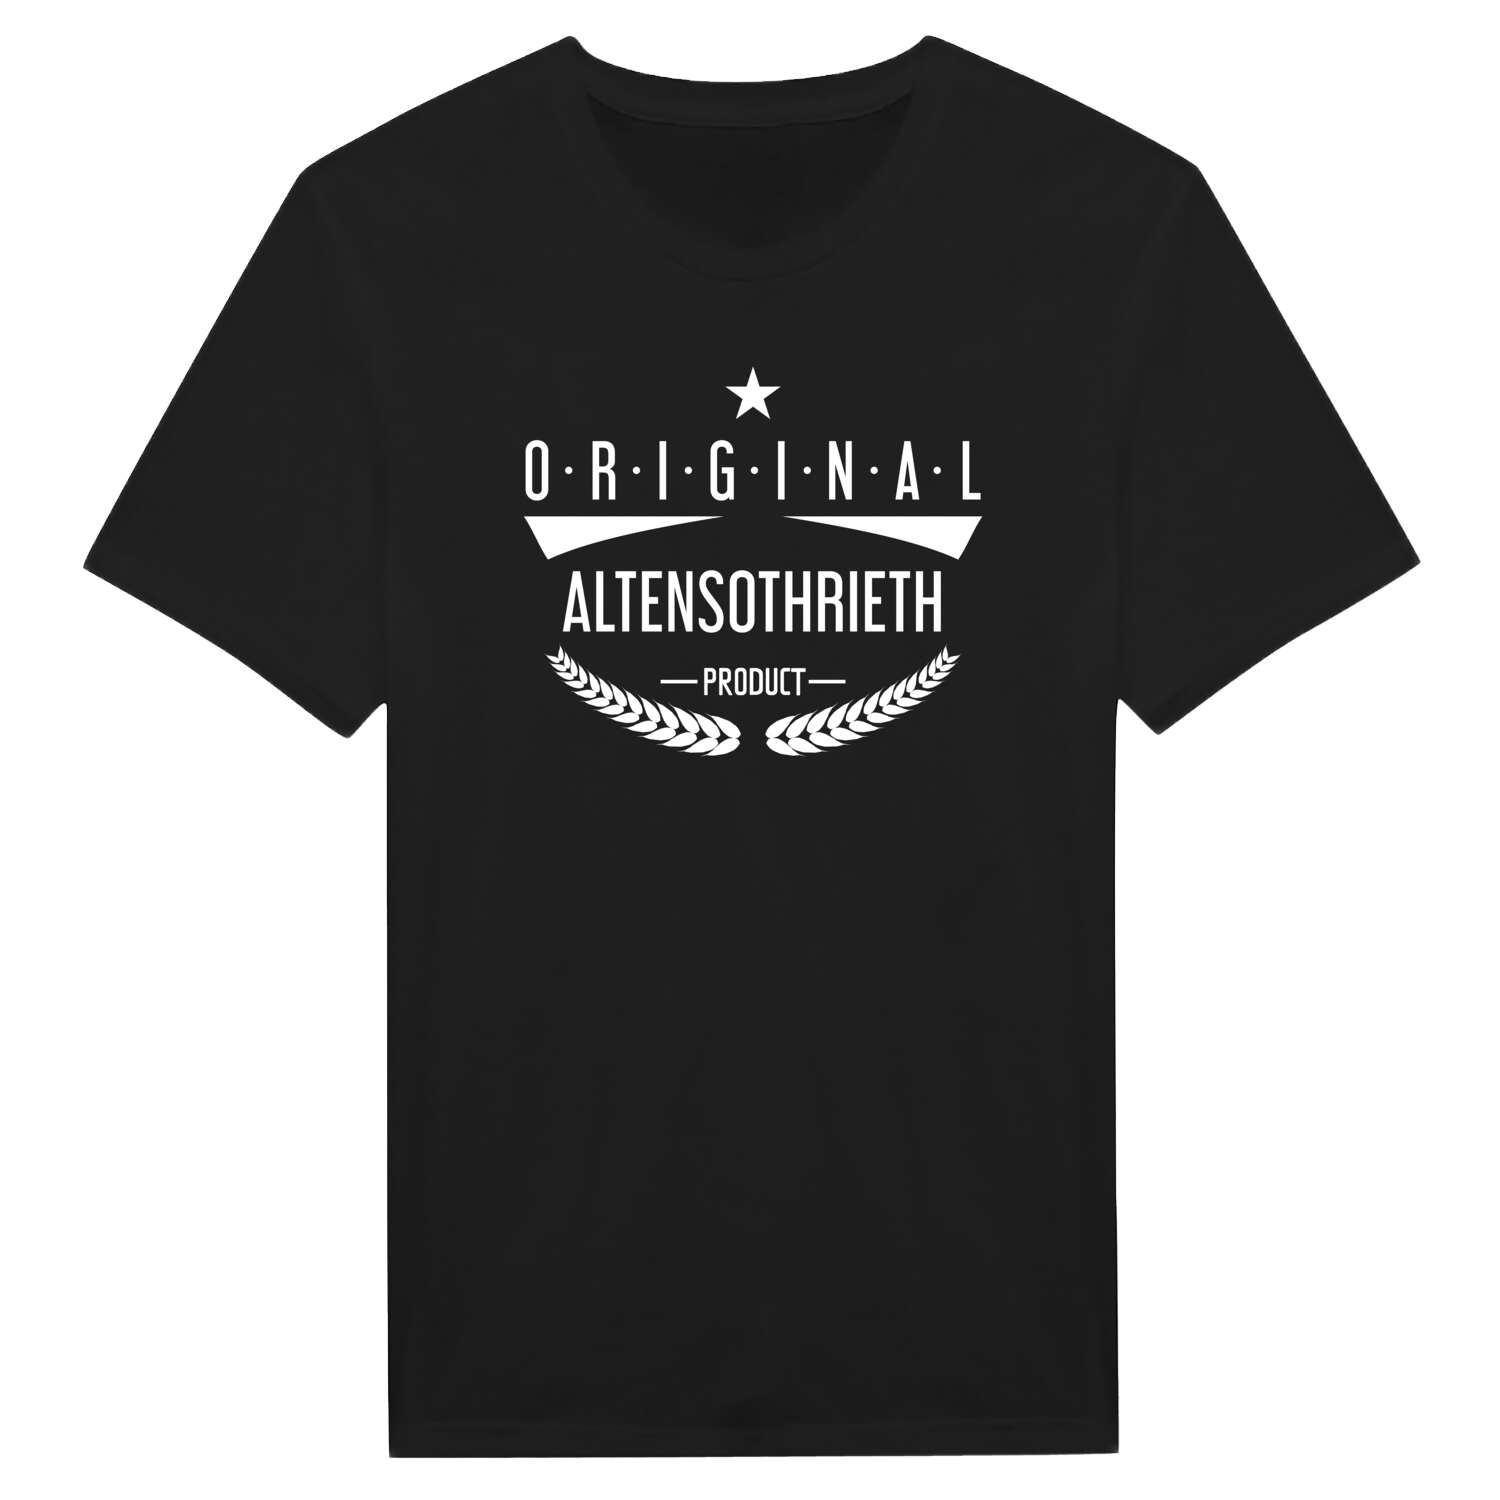 Altensothrieth T-Shirt »Original Product«